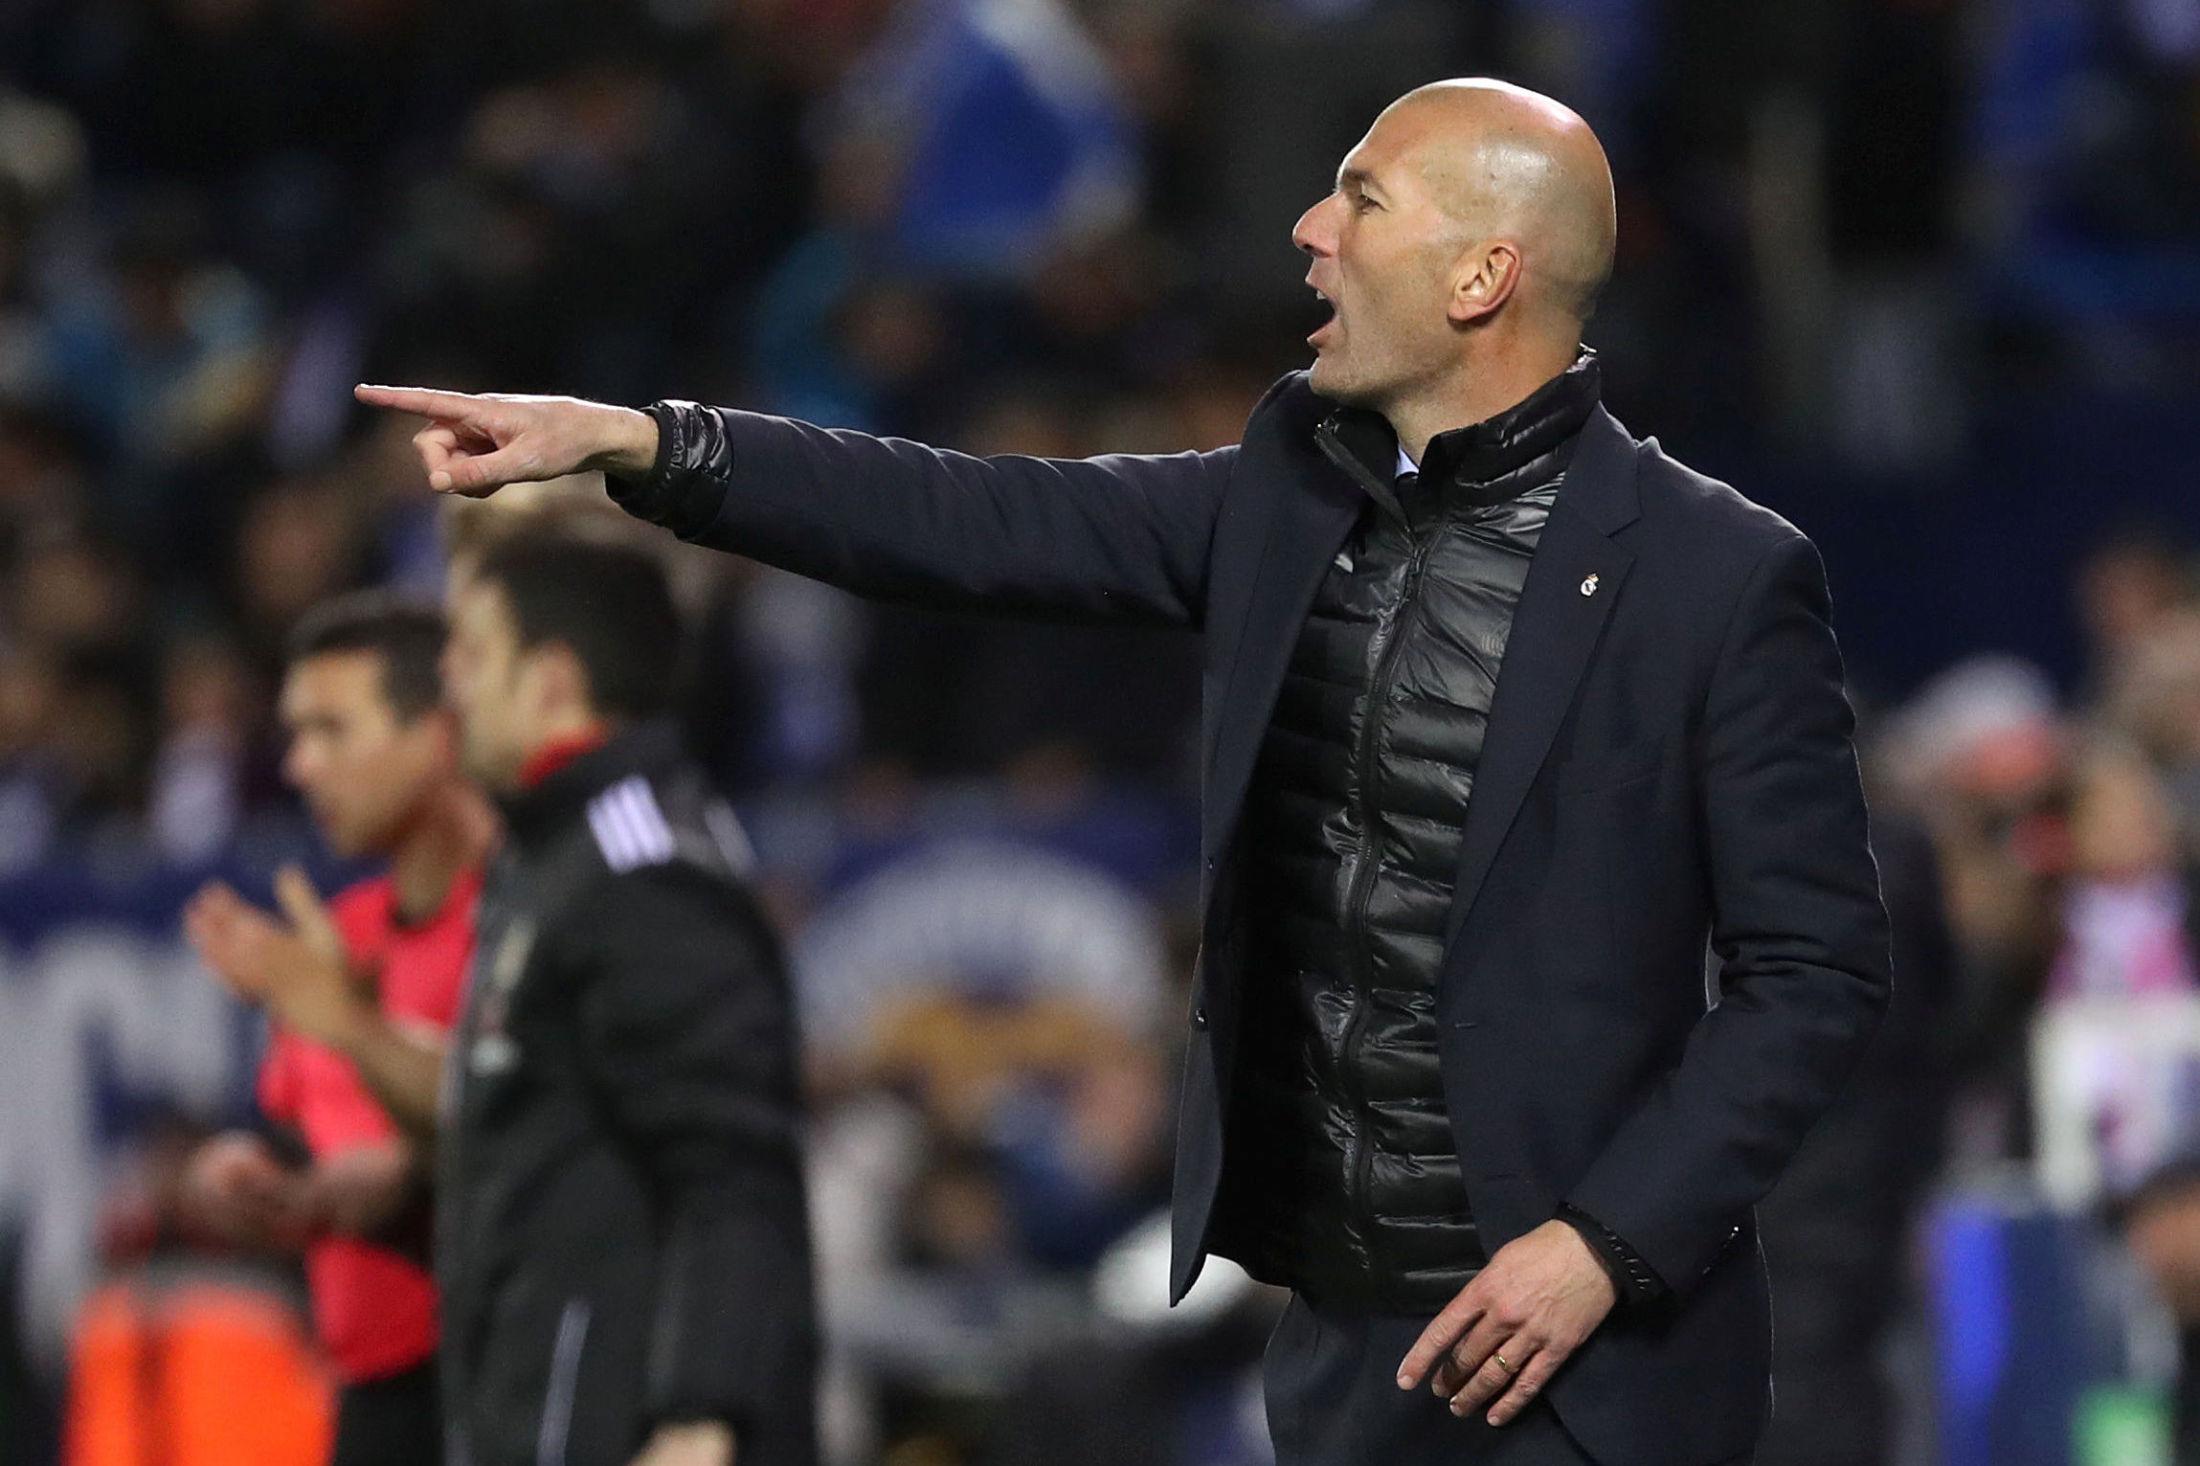 BOBLER OVER: Zinedine Zidane er blant de best kledde i fotballsirkuset, og holder varmen med dun under dressjakken. Foto: Reuters / NTB Scanpix